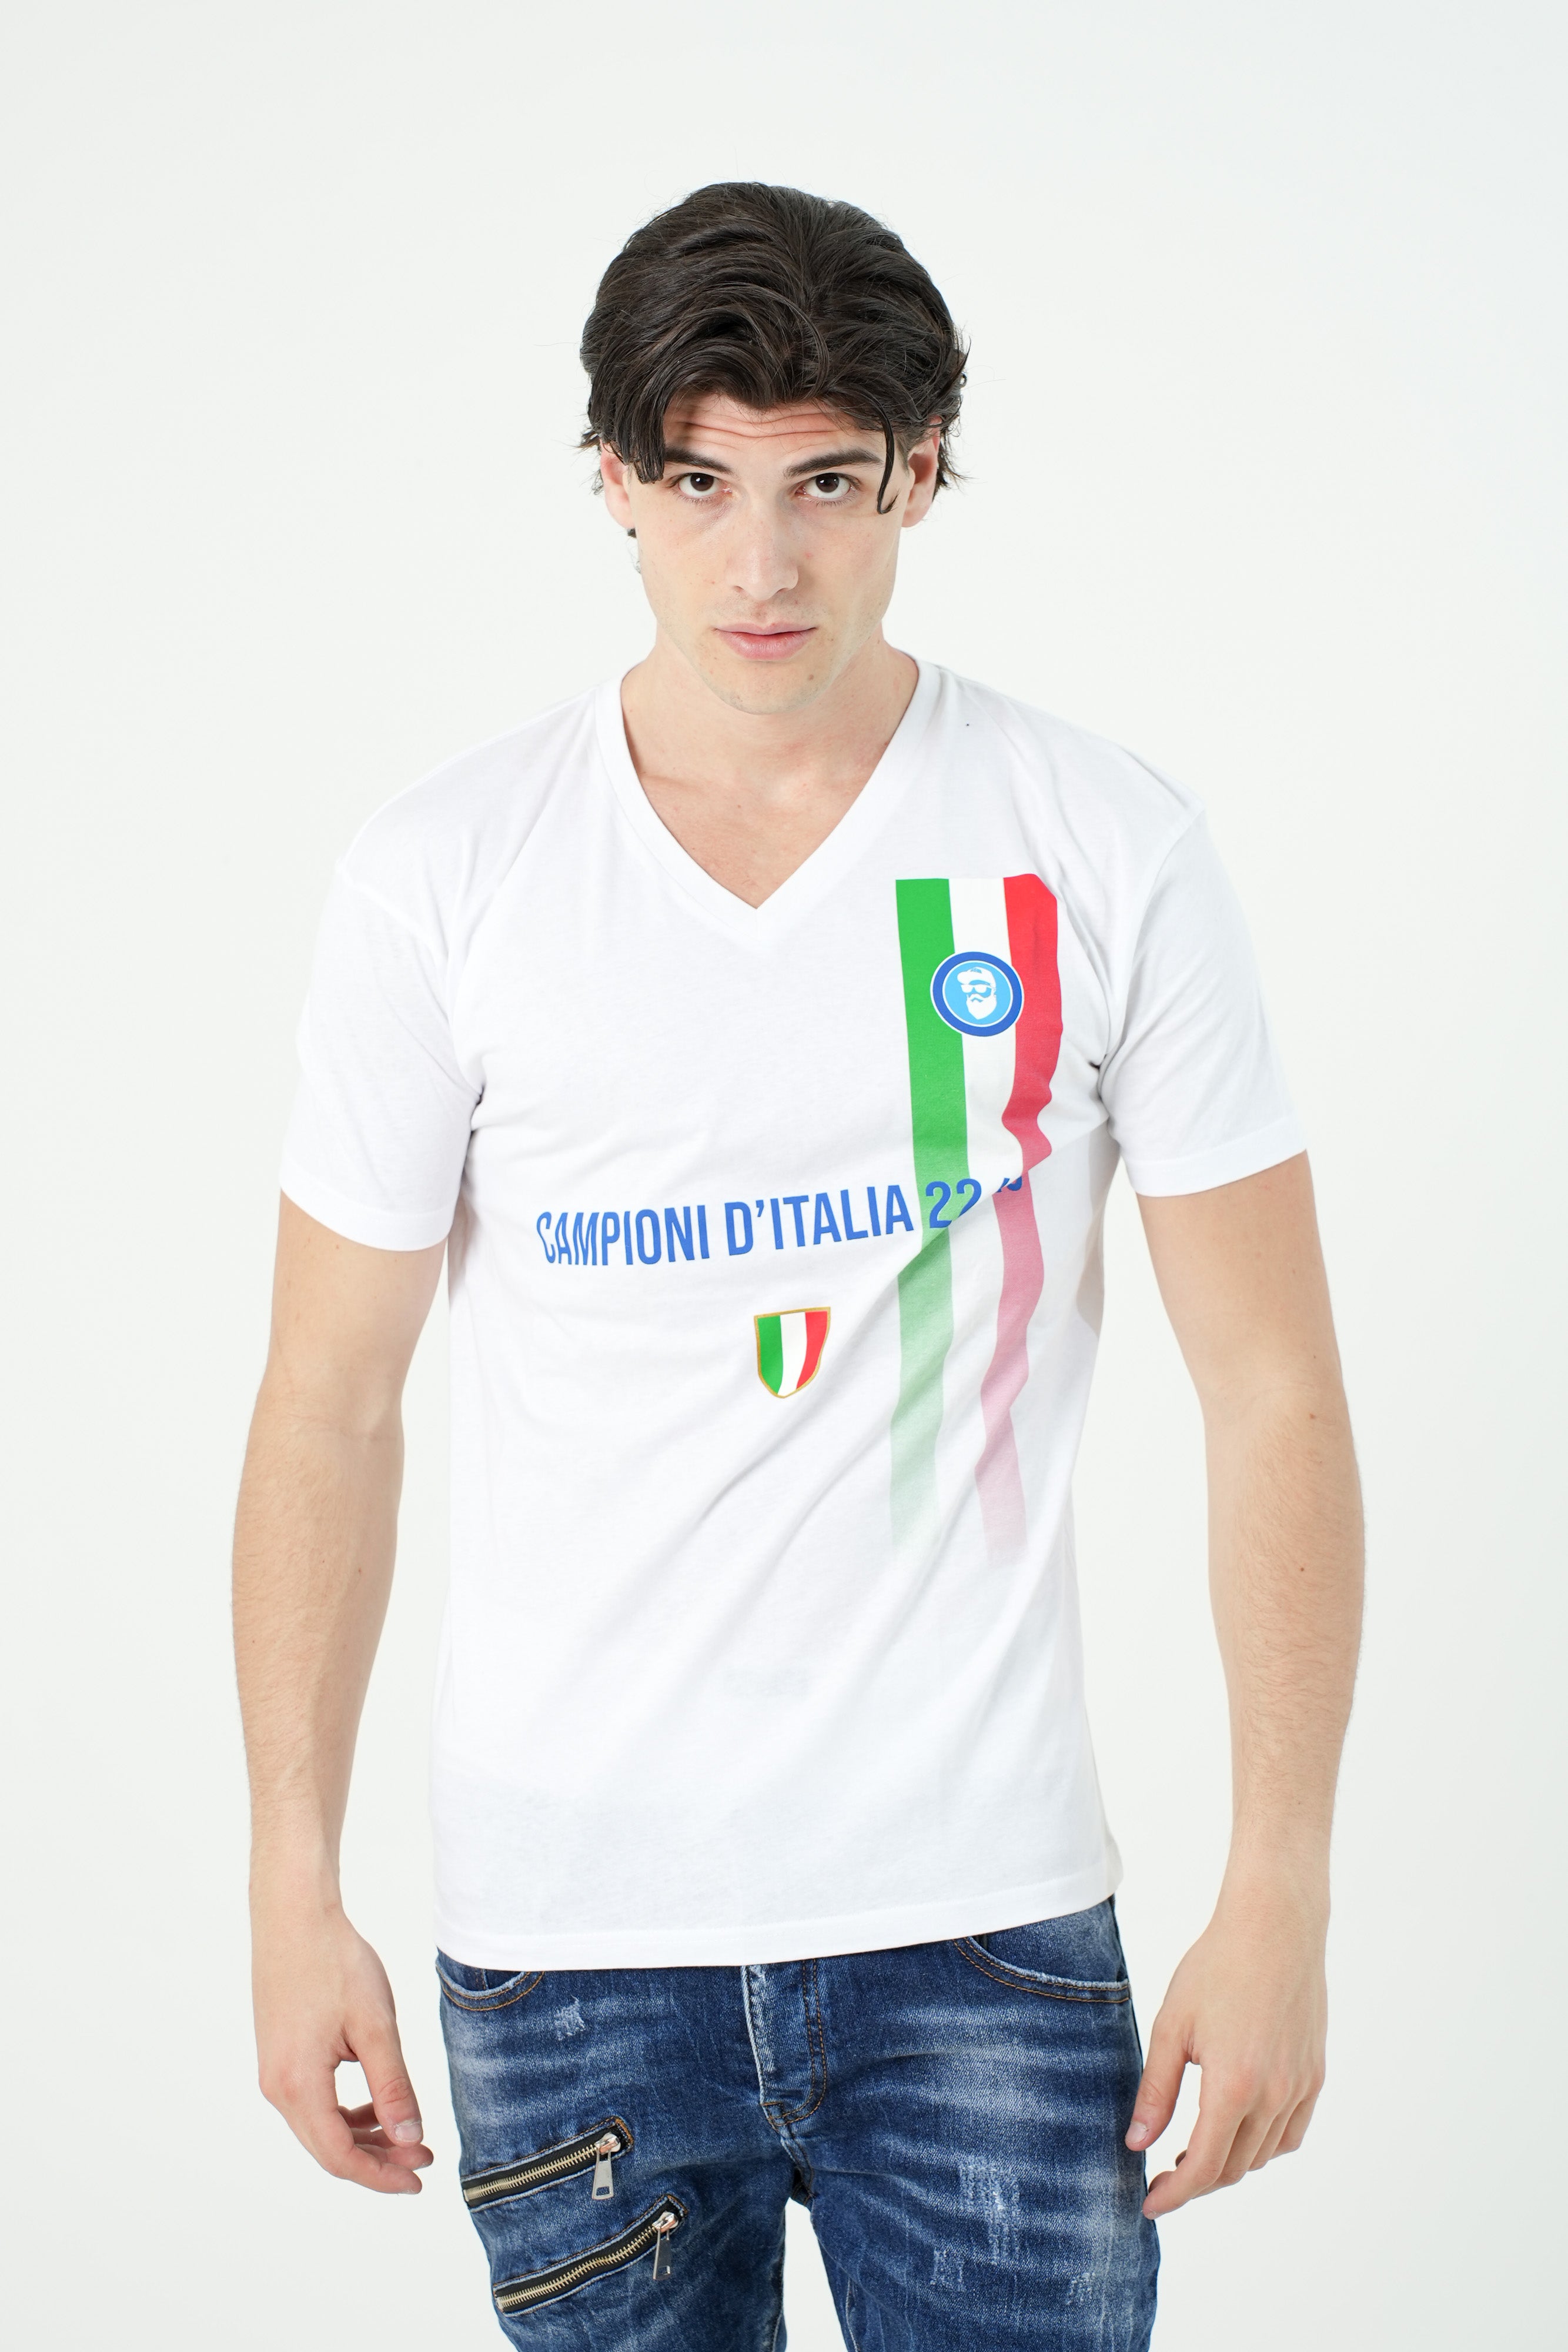 T-Shirt Campioni D'Italia